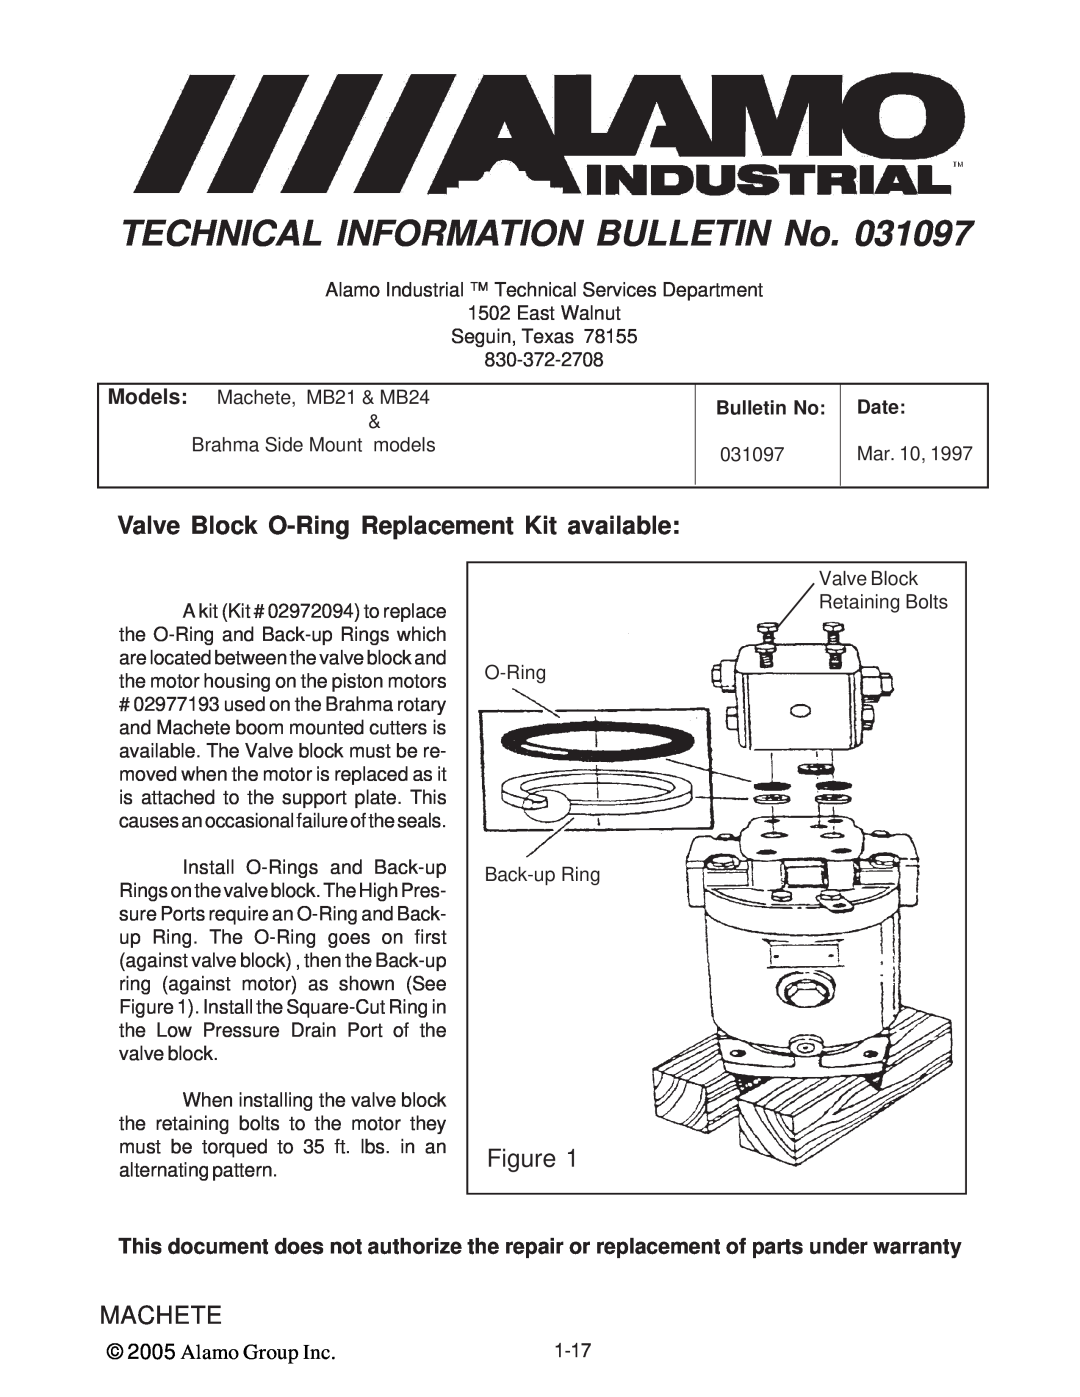 Alamo T 7740 Valve Block O-RingReplacement Kit available, TECHNICAL INFORMATION BULLETIN No, Figure, Machete, Bulletin No 